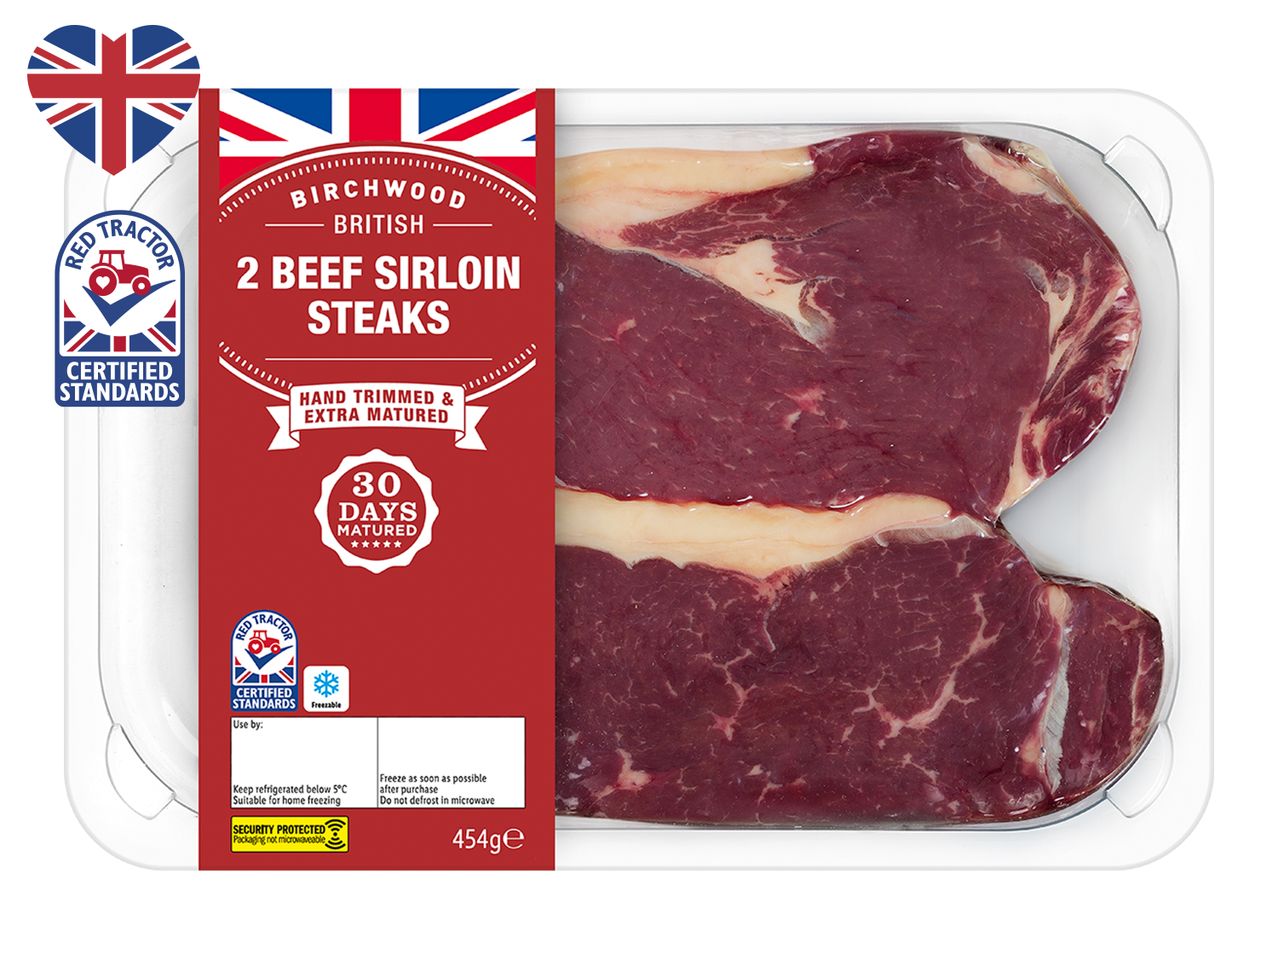 Go to full screen view: Birchwood British 2 Beef Sirloin Steaks - Image 1